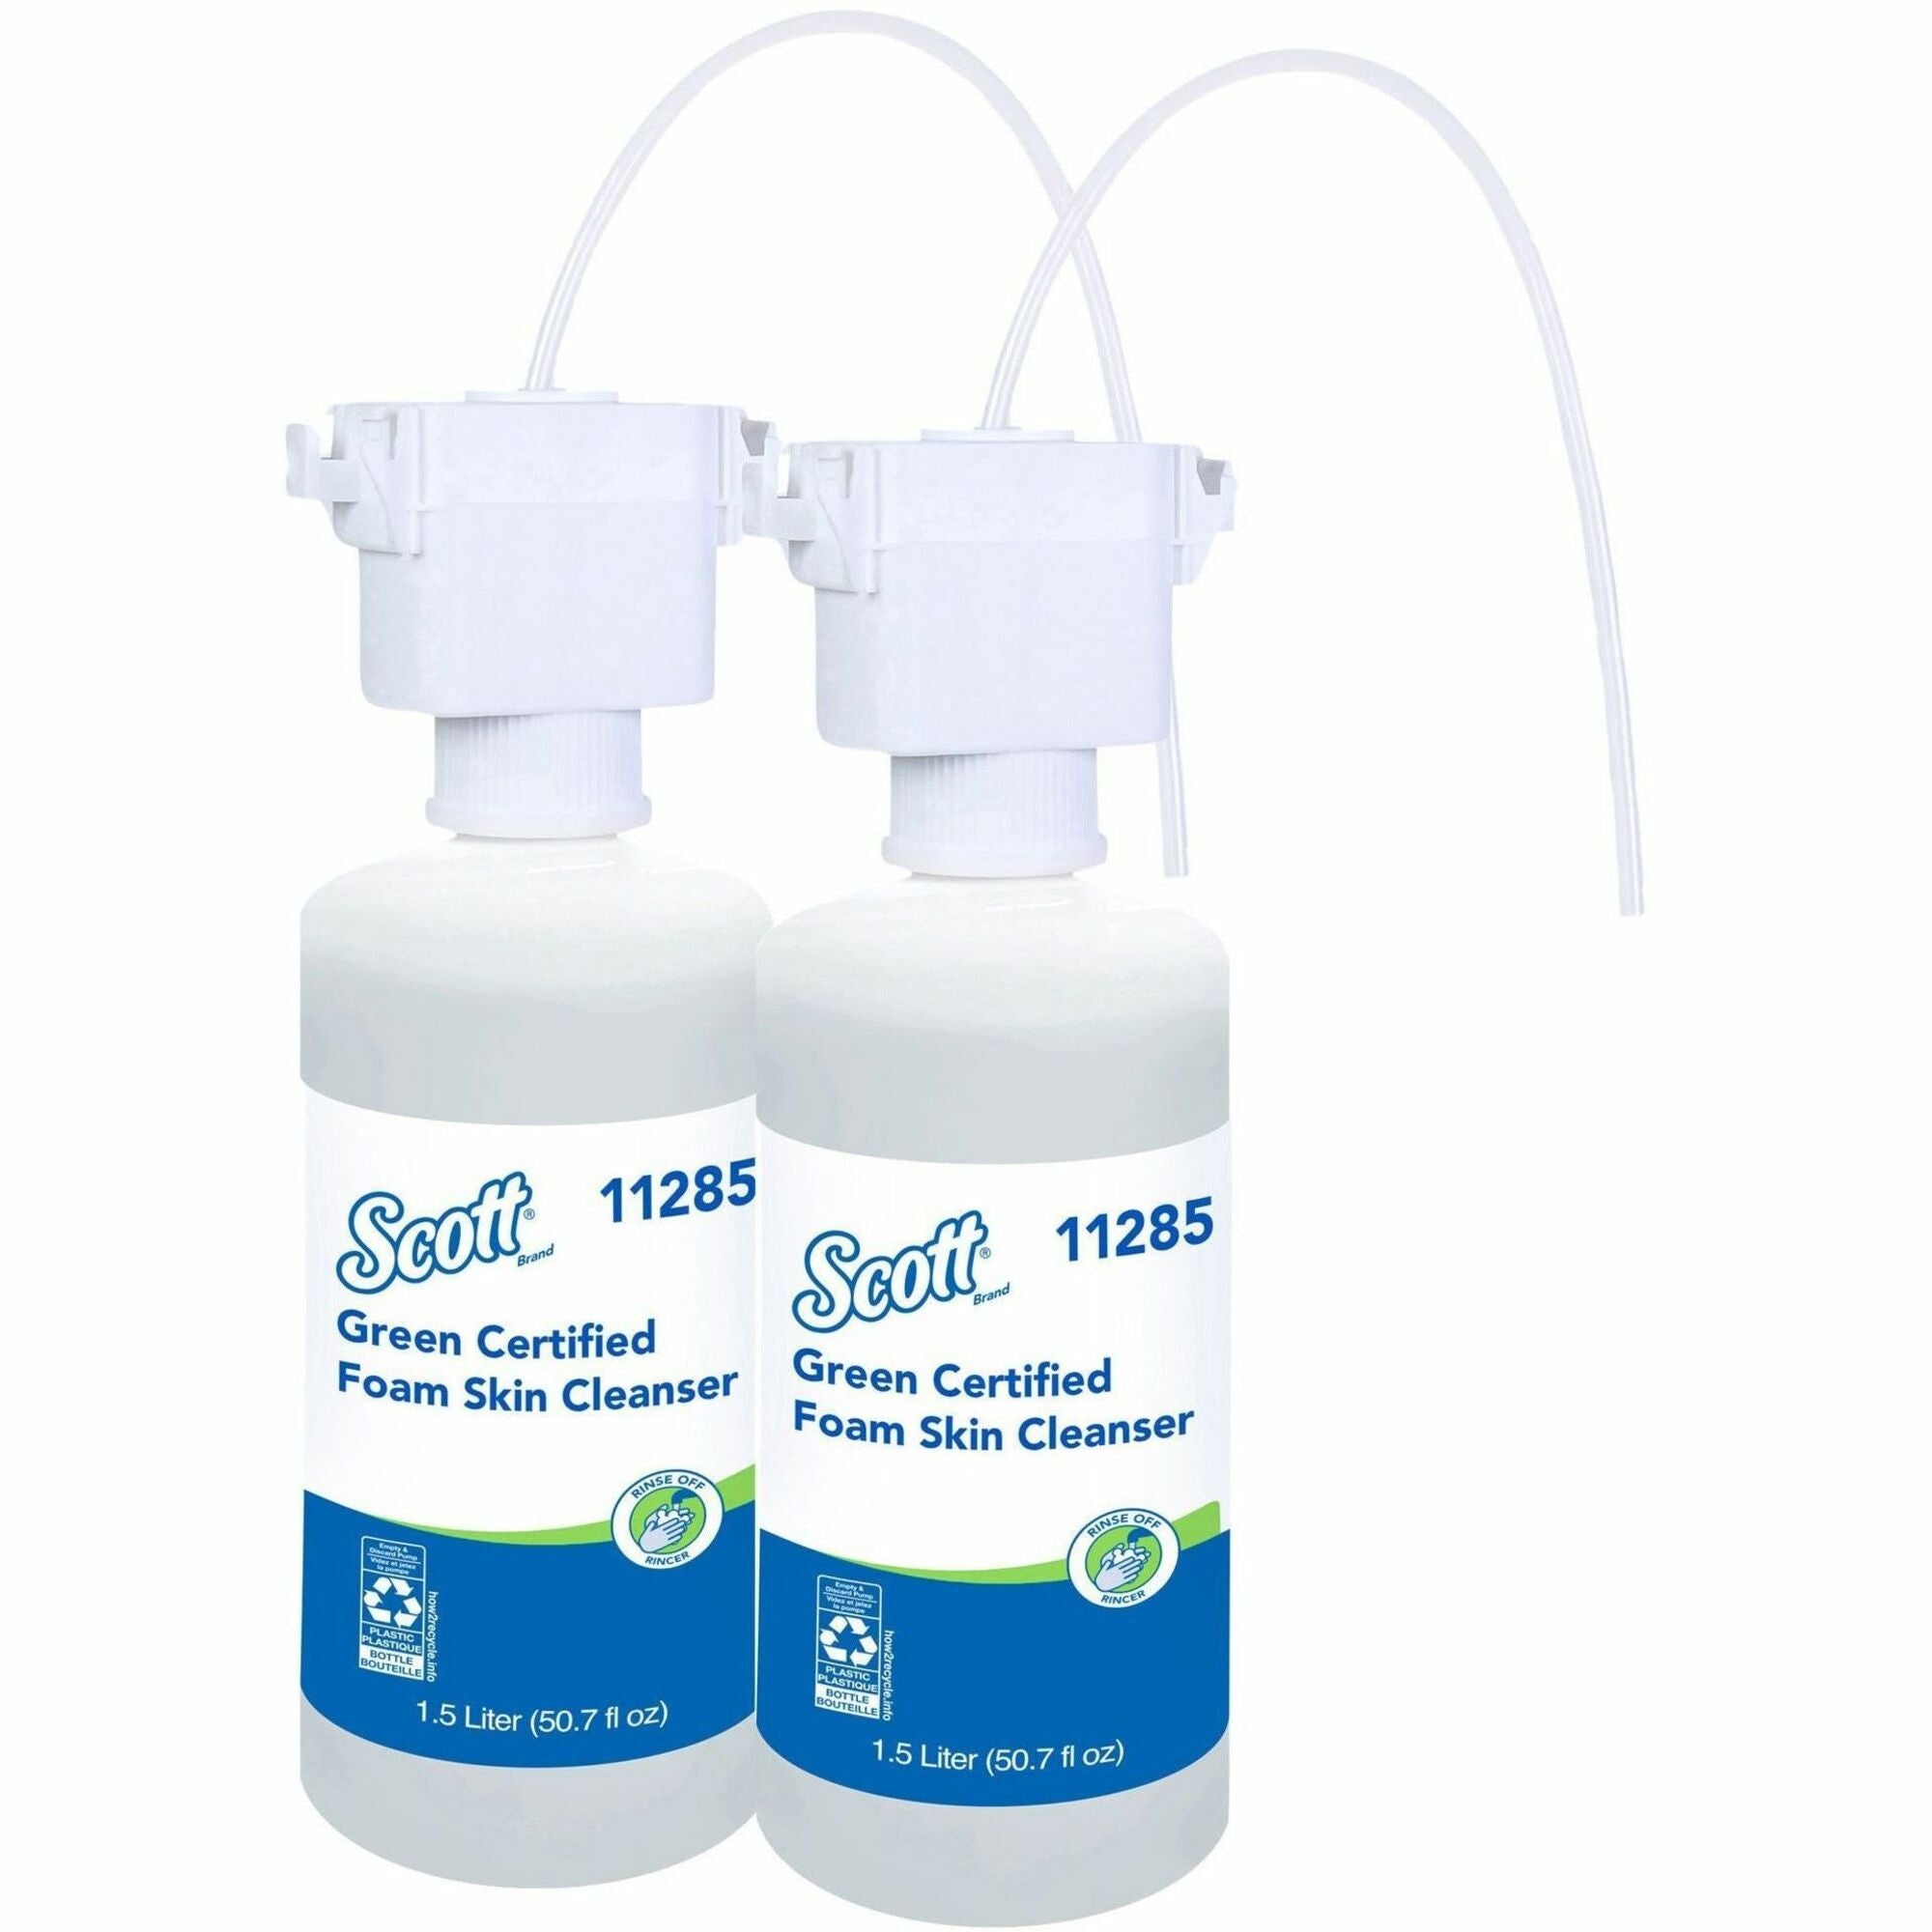 scott-essential-green-certified-foam-skin-cleanser-foam-159-quart-applicable-on-hand-fragrance-free-dye-free-2-carton_kcc11285ct - 1